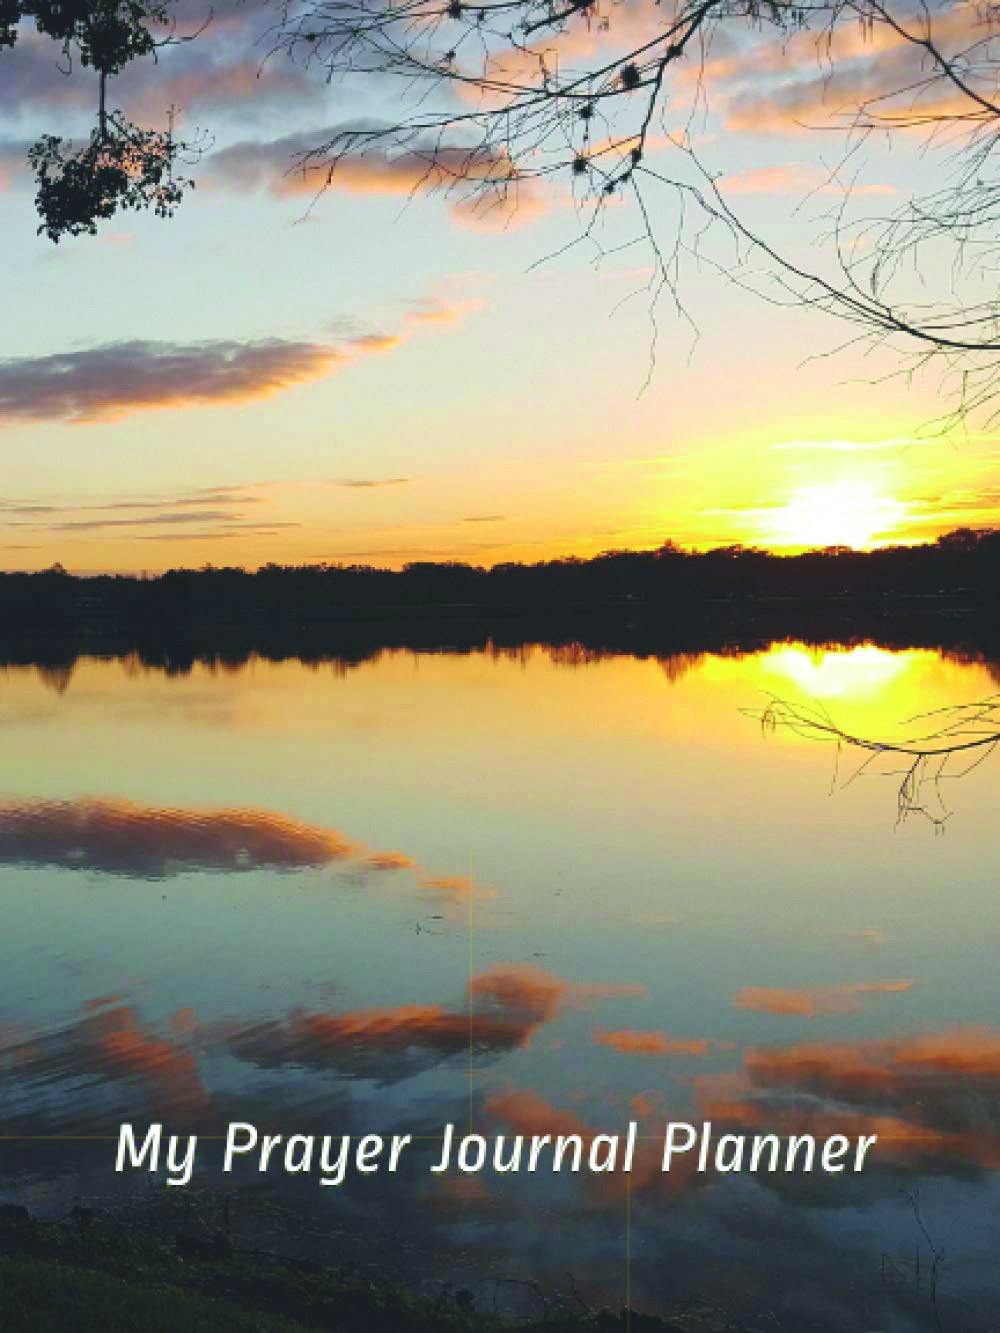 Channer's prayer journal